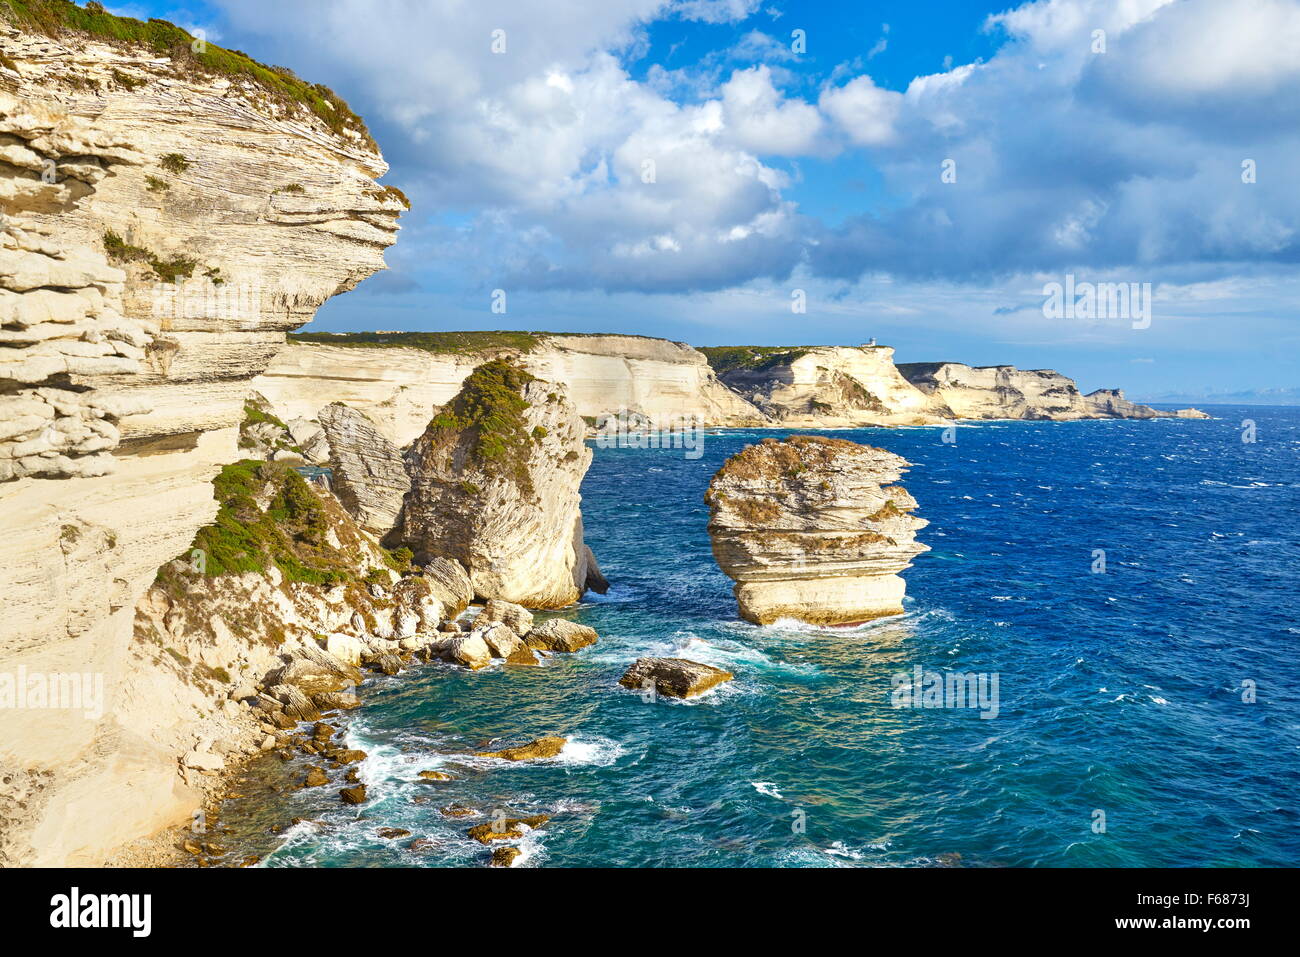 The limestone cliff, Bonifacio, South Coast of Corsica Island, France Stock Photo